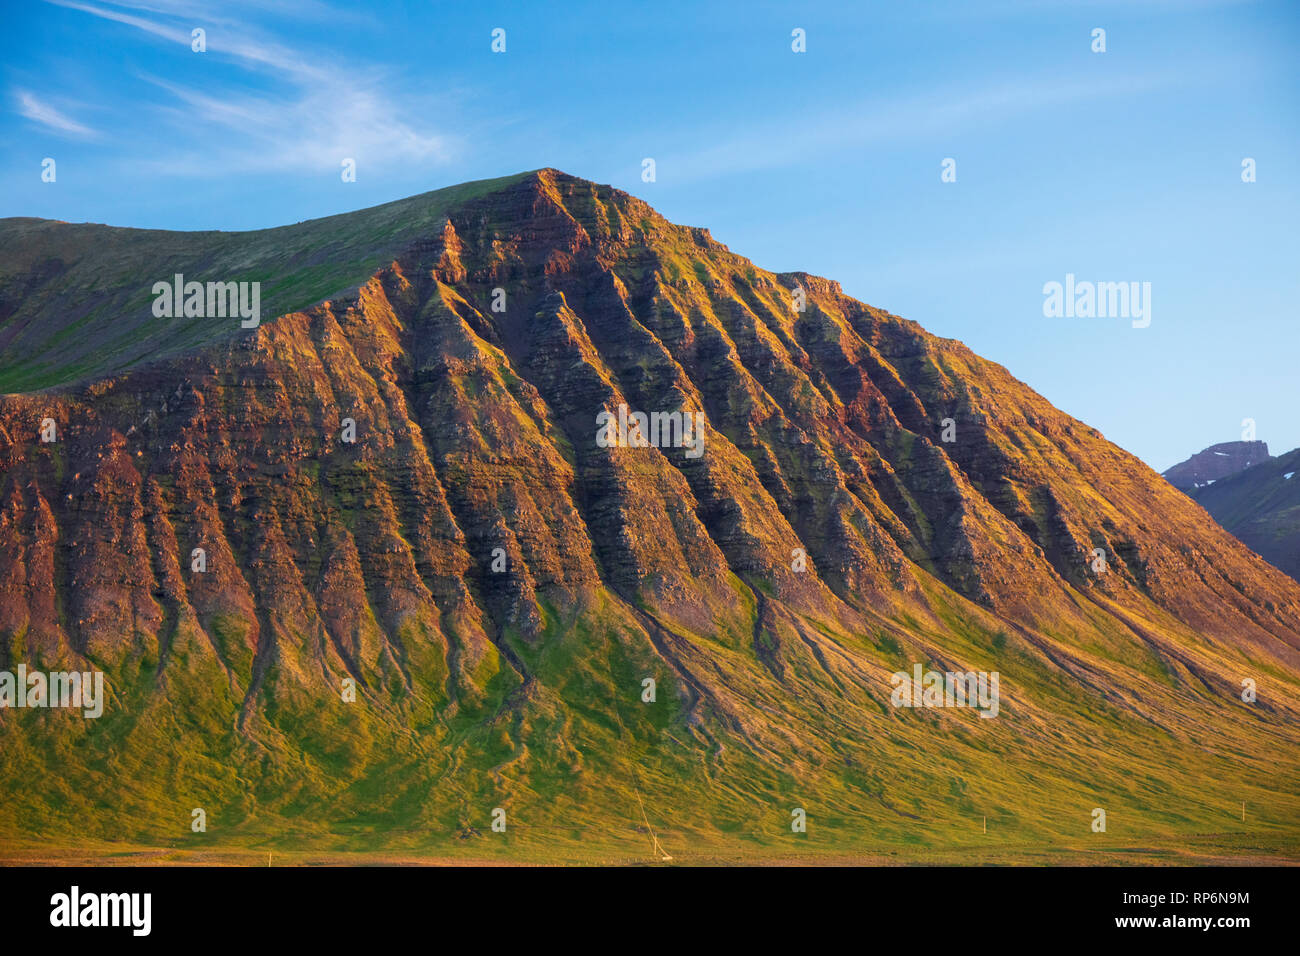 Erosion gullies define a mountain near Pingeyri, Westfjords, Iceland. Stock Photo